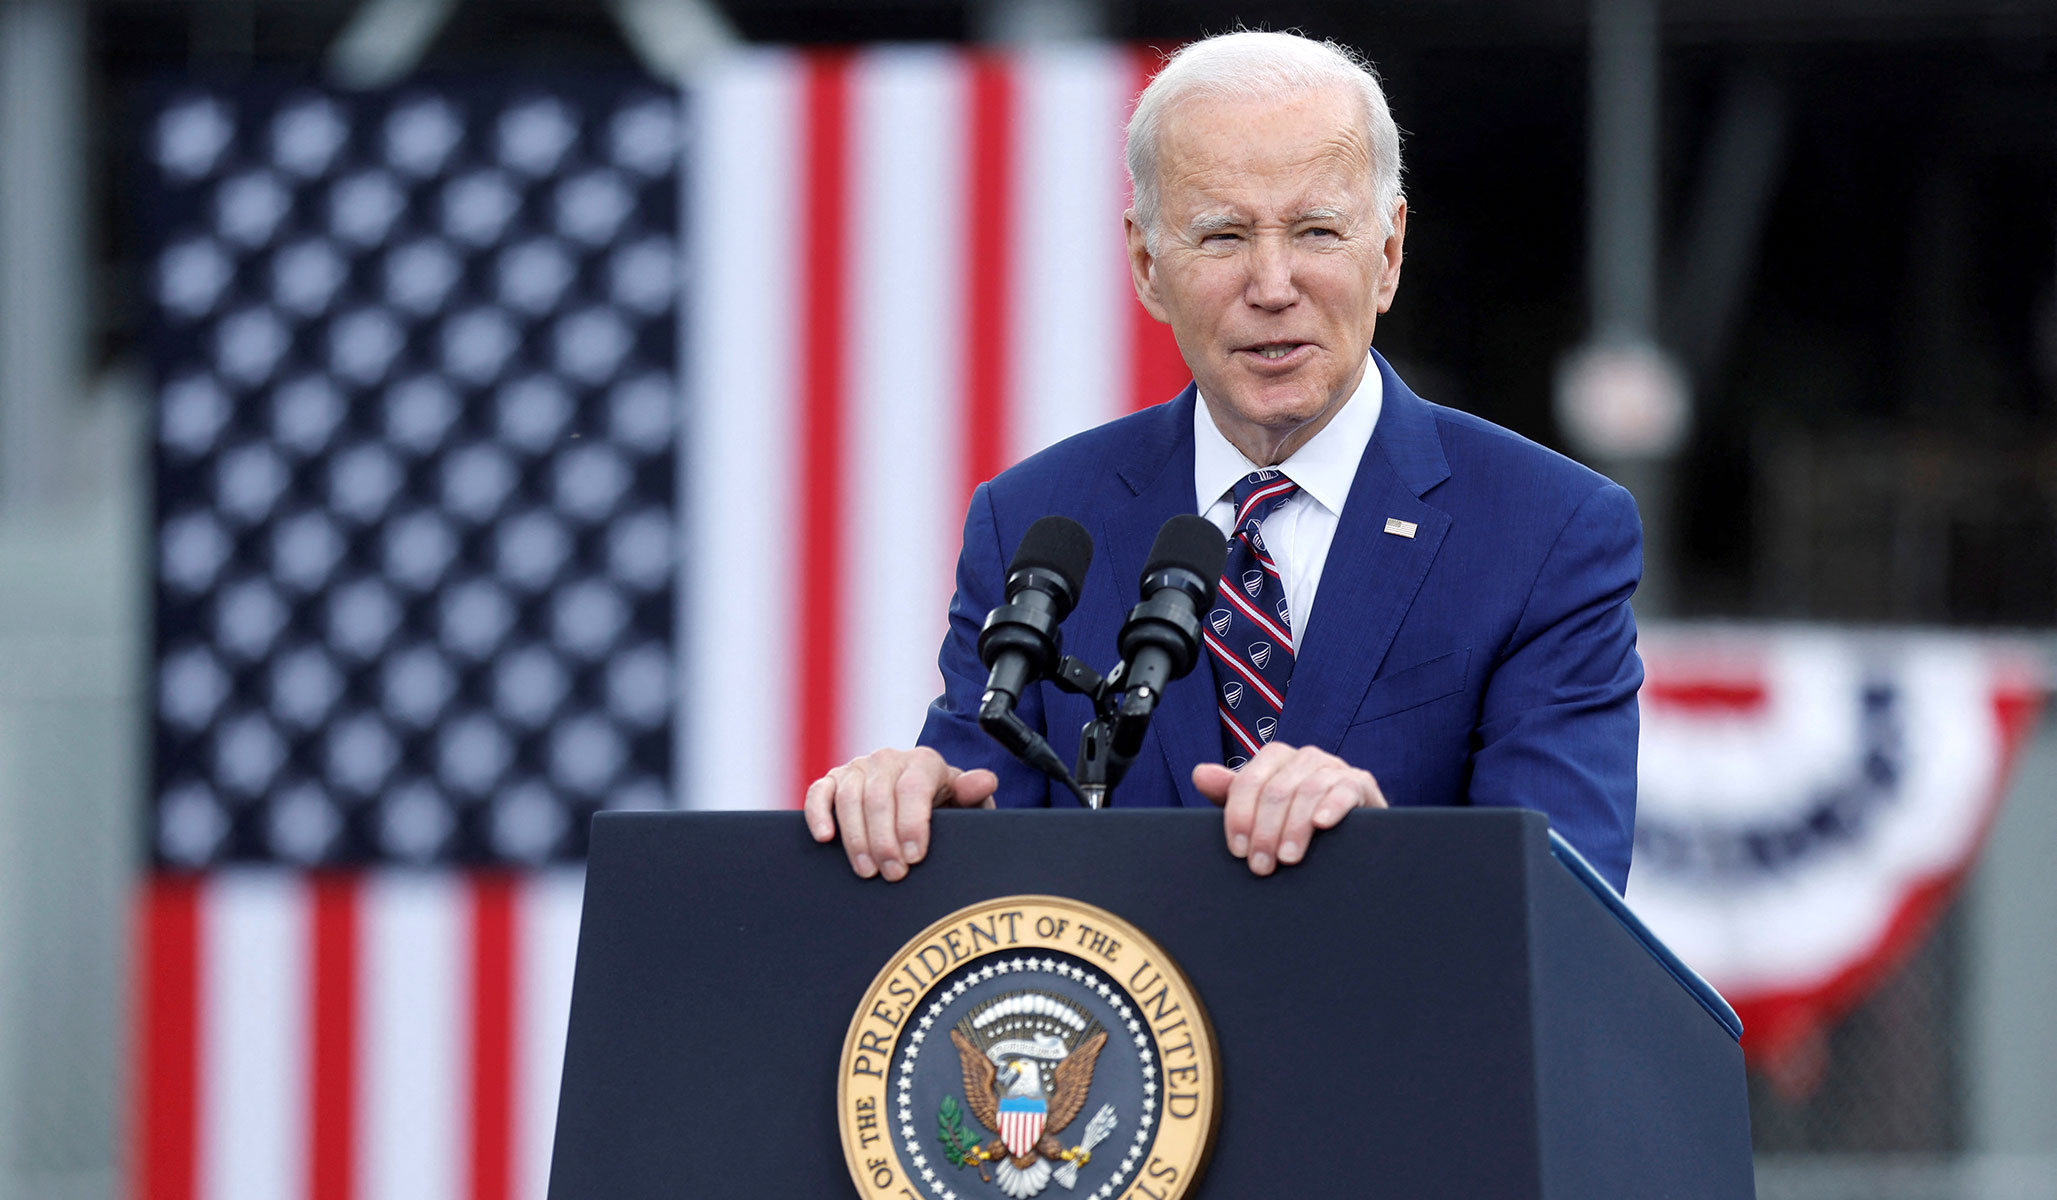 NextImg:Joe Biden Is the Favorite for 2024 